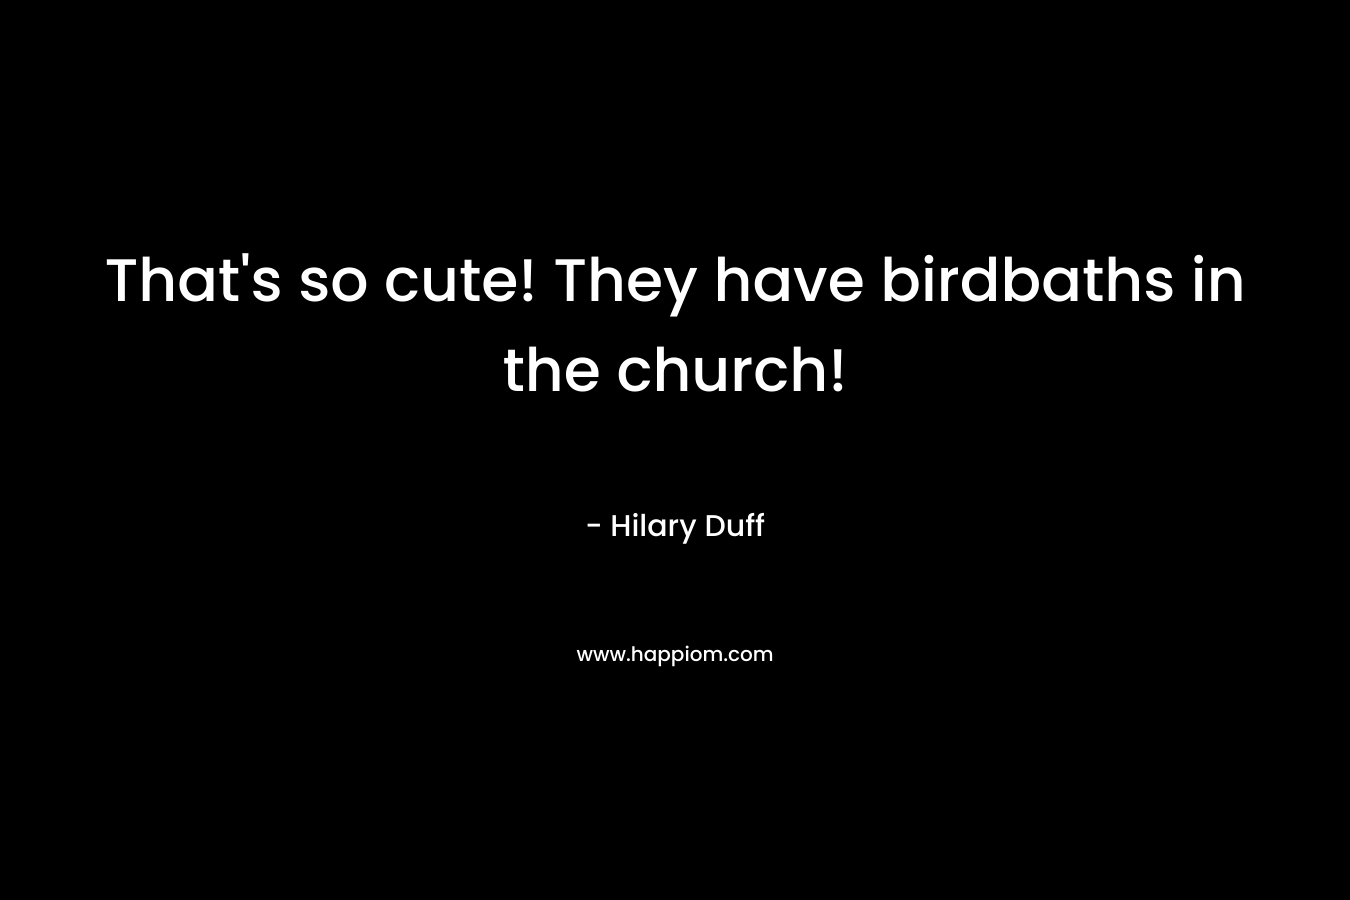 That's so cute! They have birdbaths in the church!